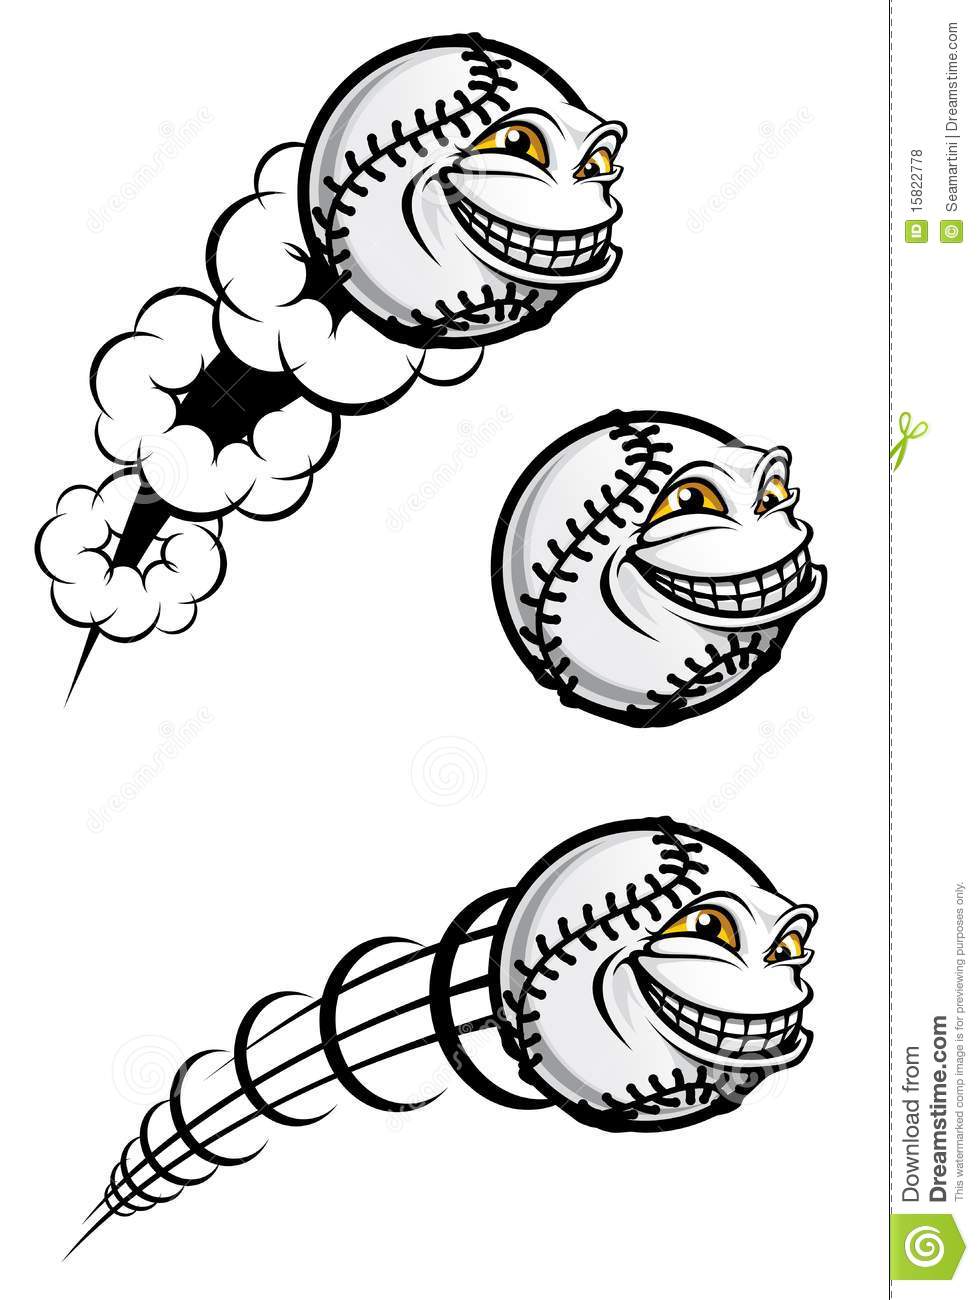 Baseball Symbol Royalty Free Stock Photos   Image  15822778